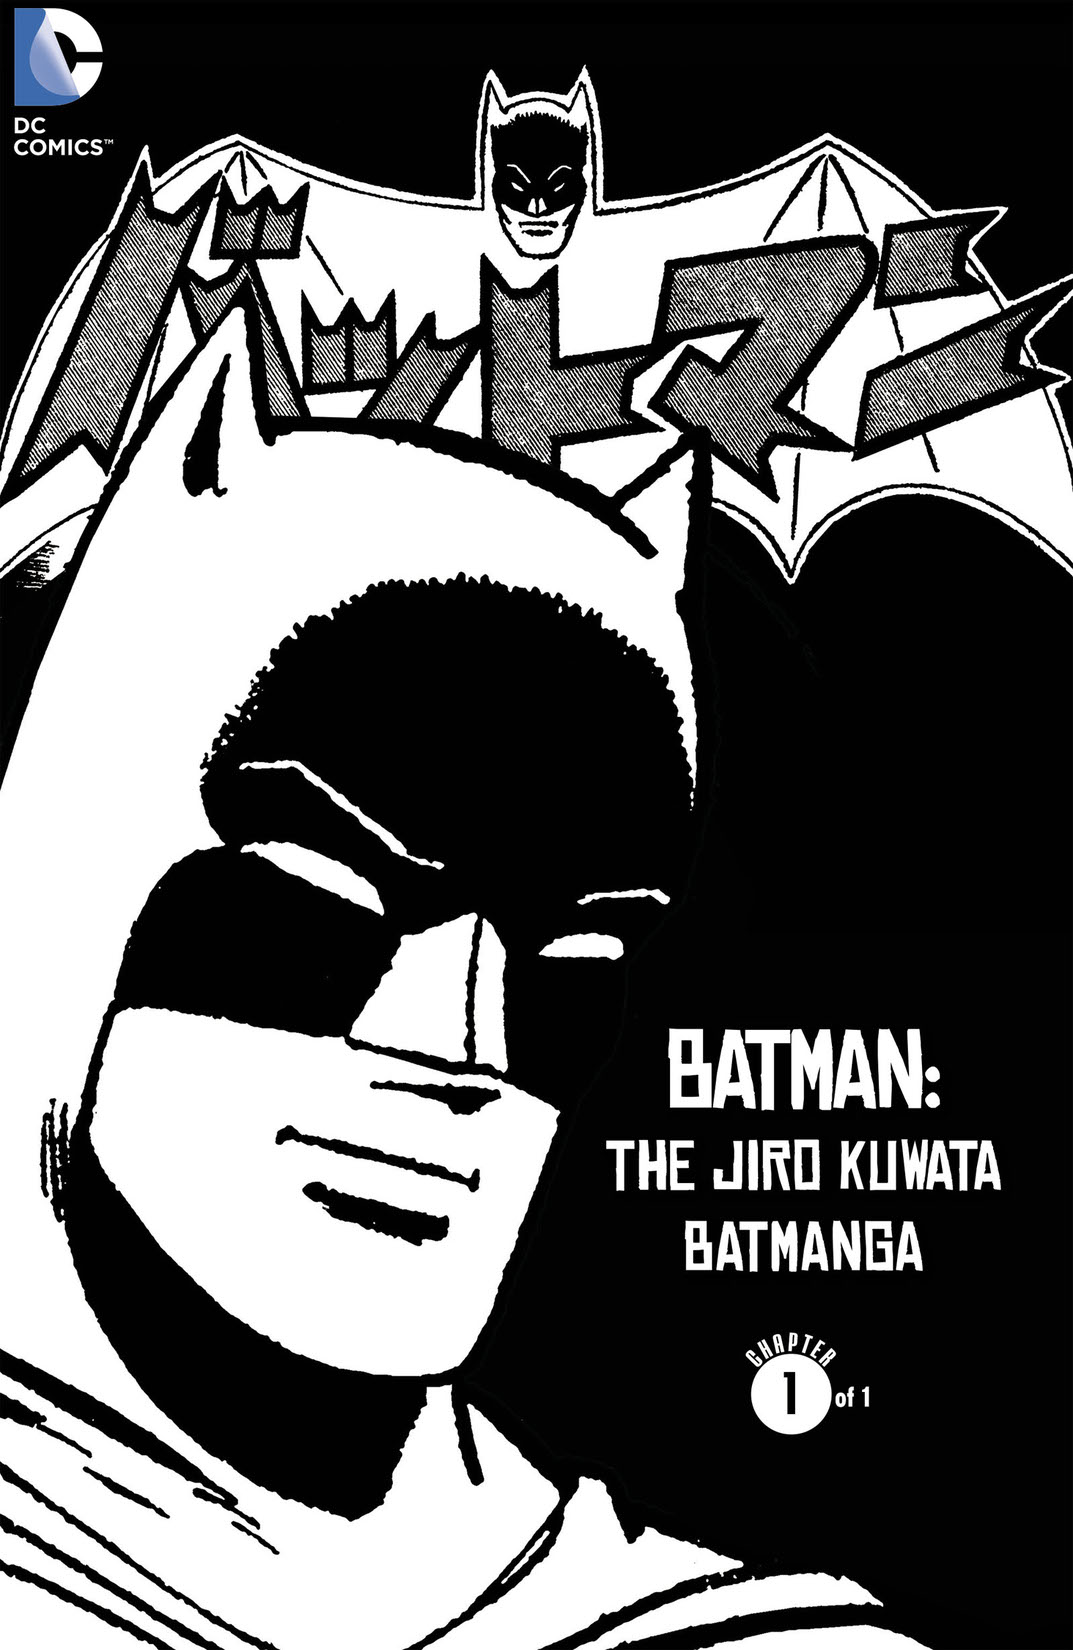 Batman: The Jiro Kuwata Batmanga #46 preview images